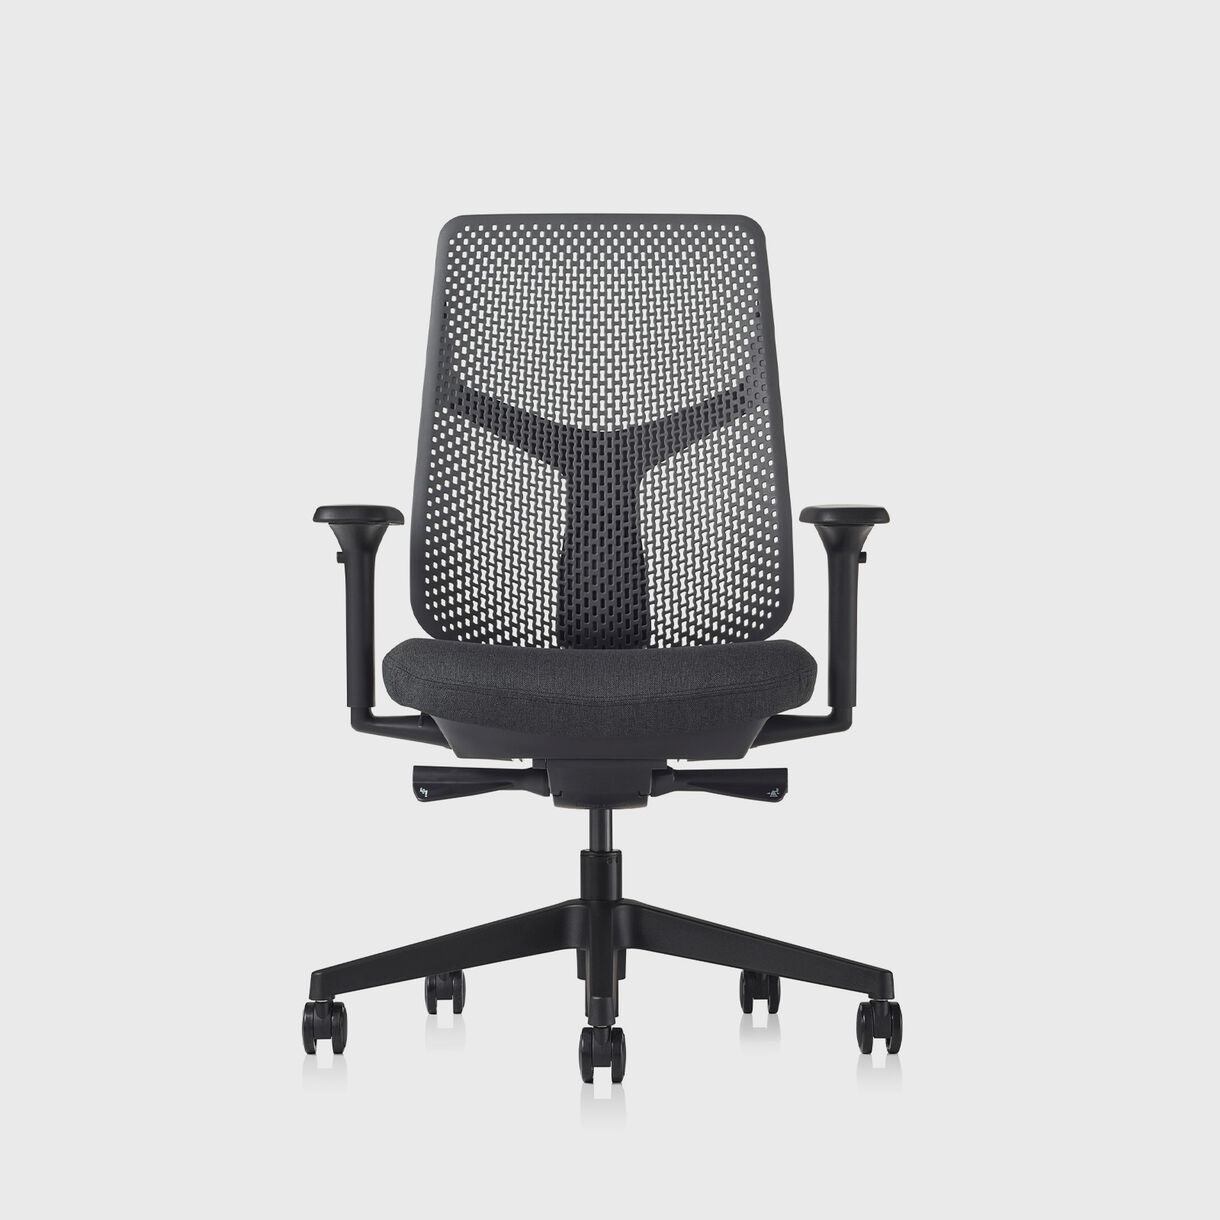 Verus TriFlex Back Task Chair - Black Frame, Dark Carbon TriFlex & Cinder Upholstery - Fully Adjustable Arms